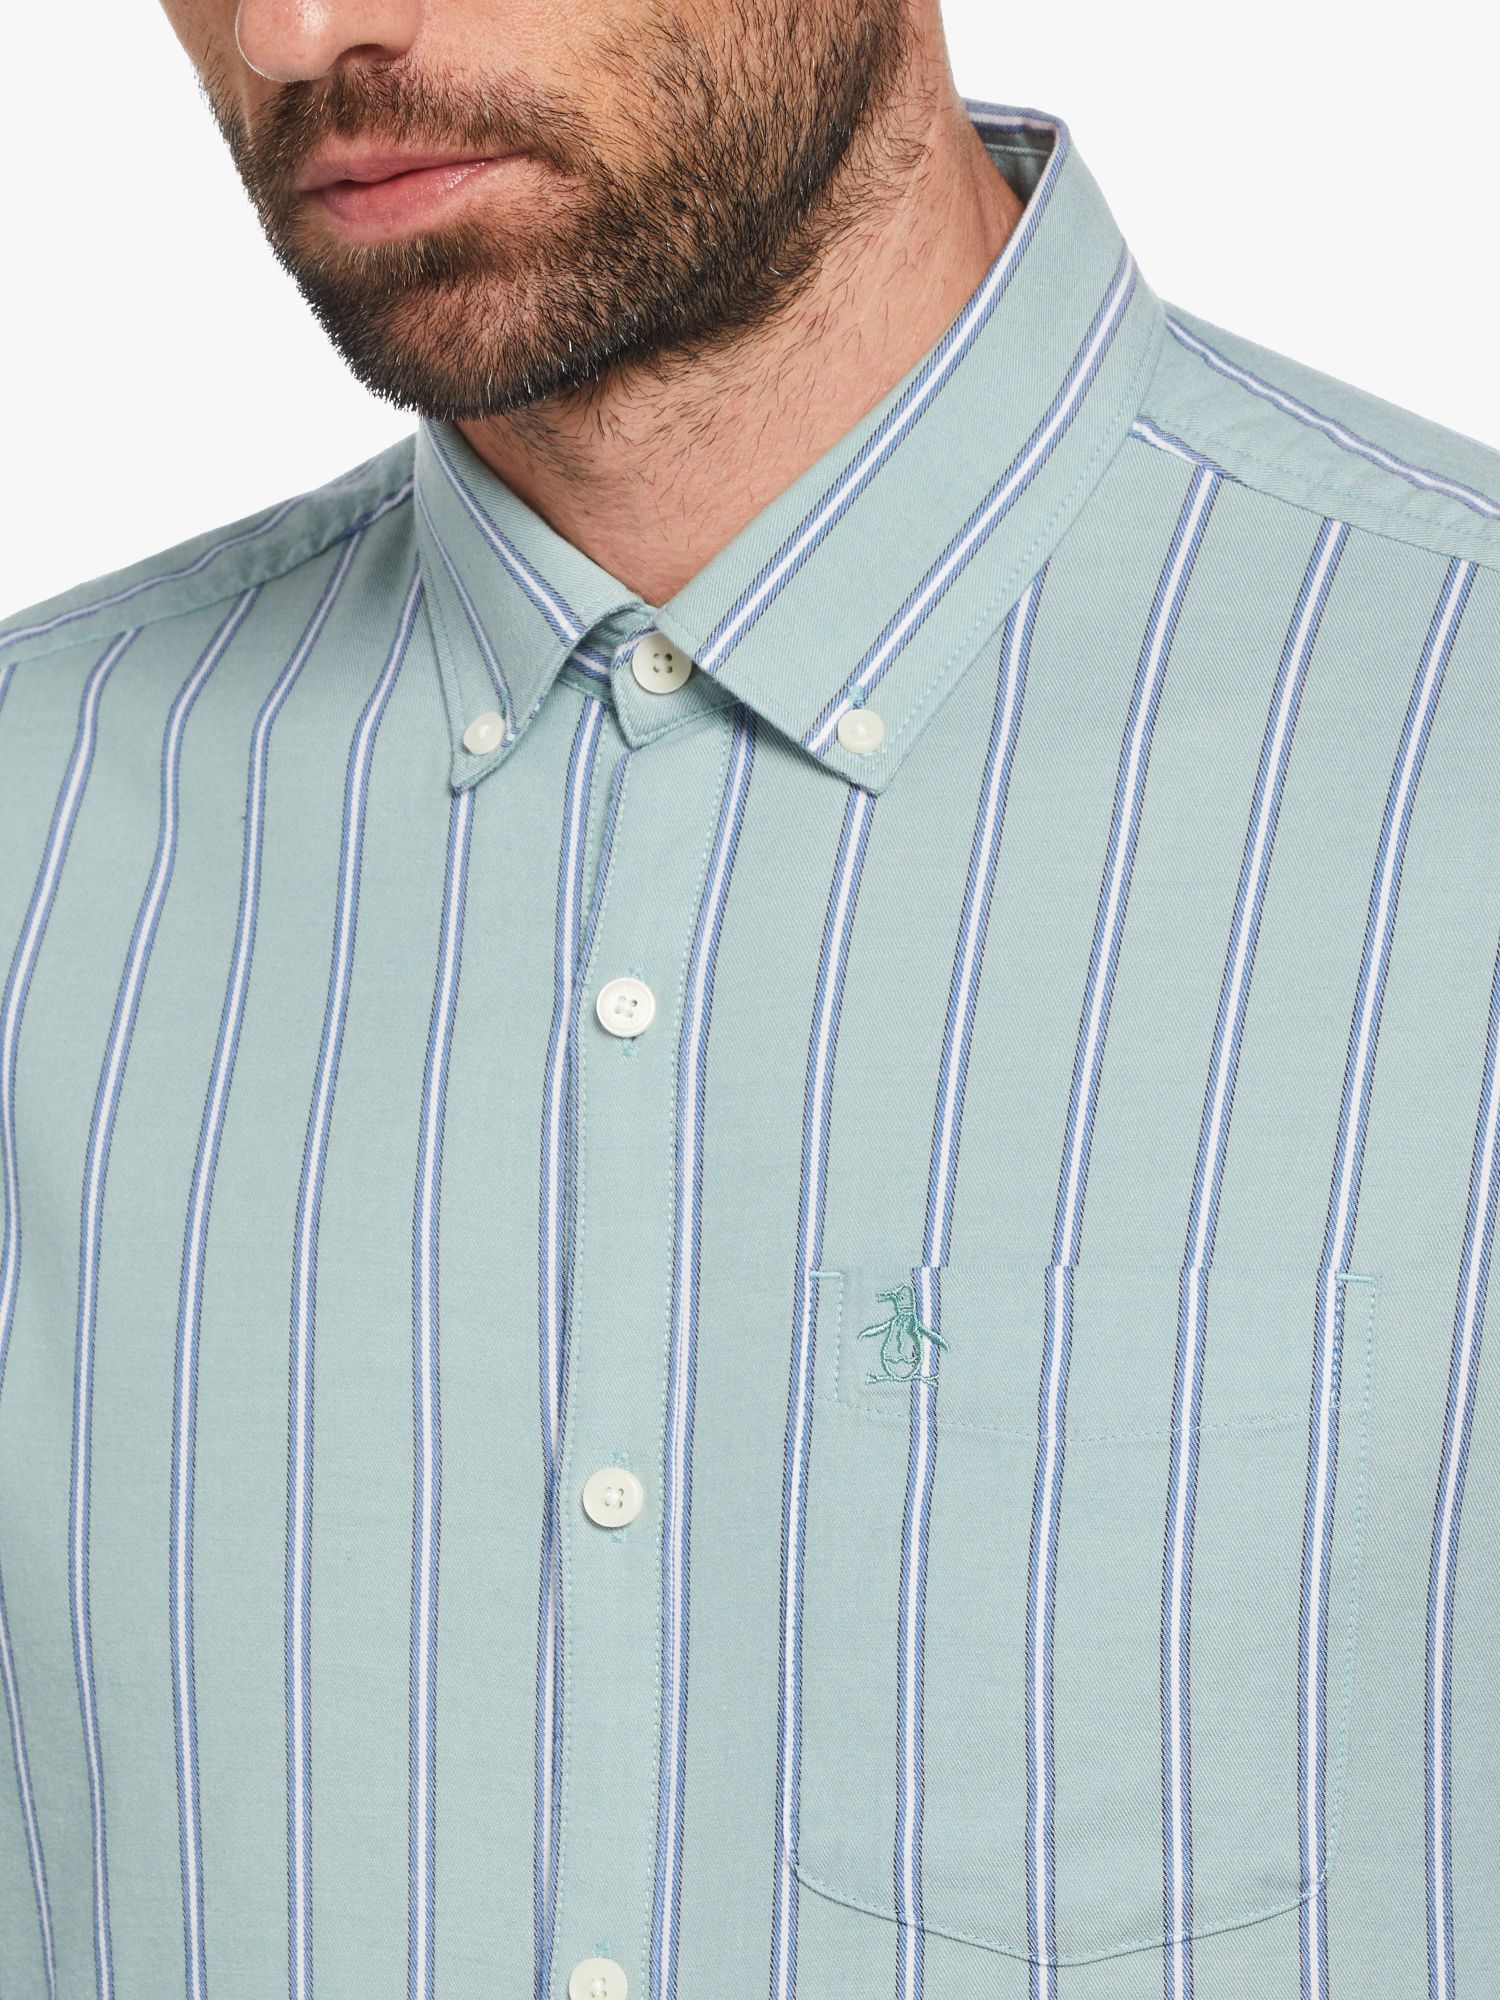 Original Penguin Vertical Stripe Shirt, Oil Blue, XL